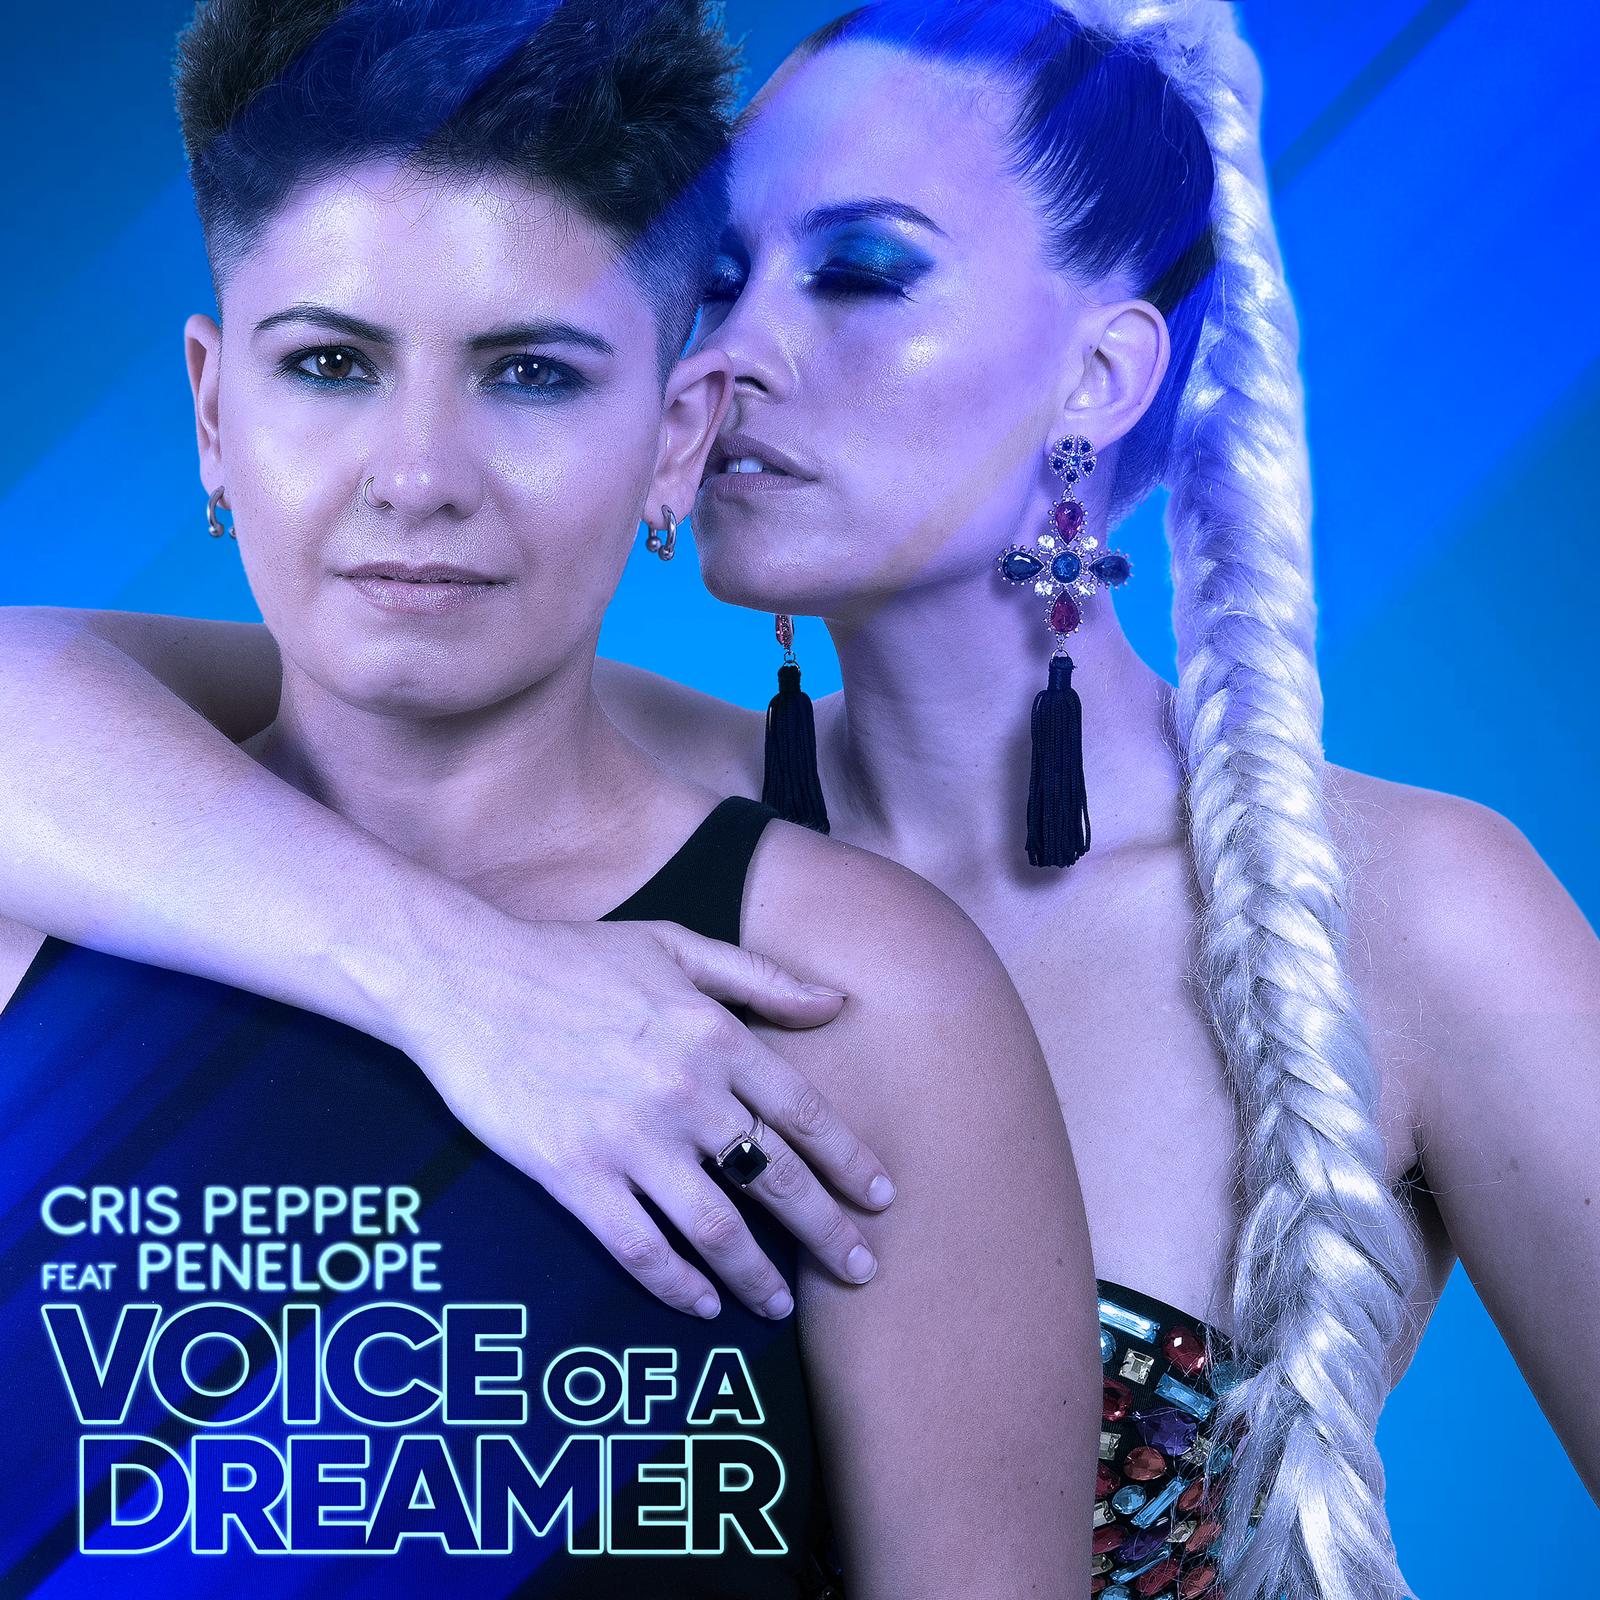 Capa do single Voice of a Dreamer - Cris pepper e Penelope